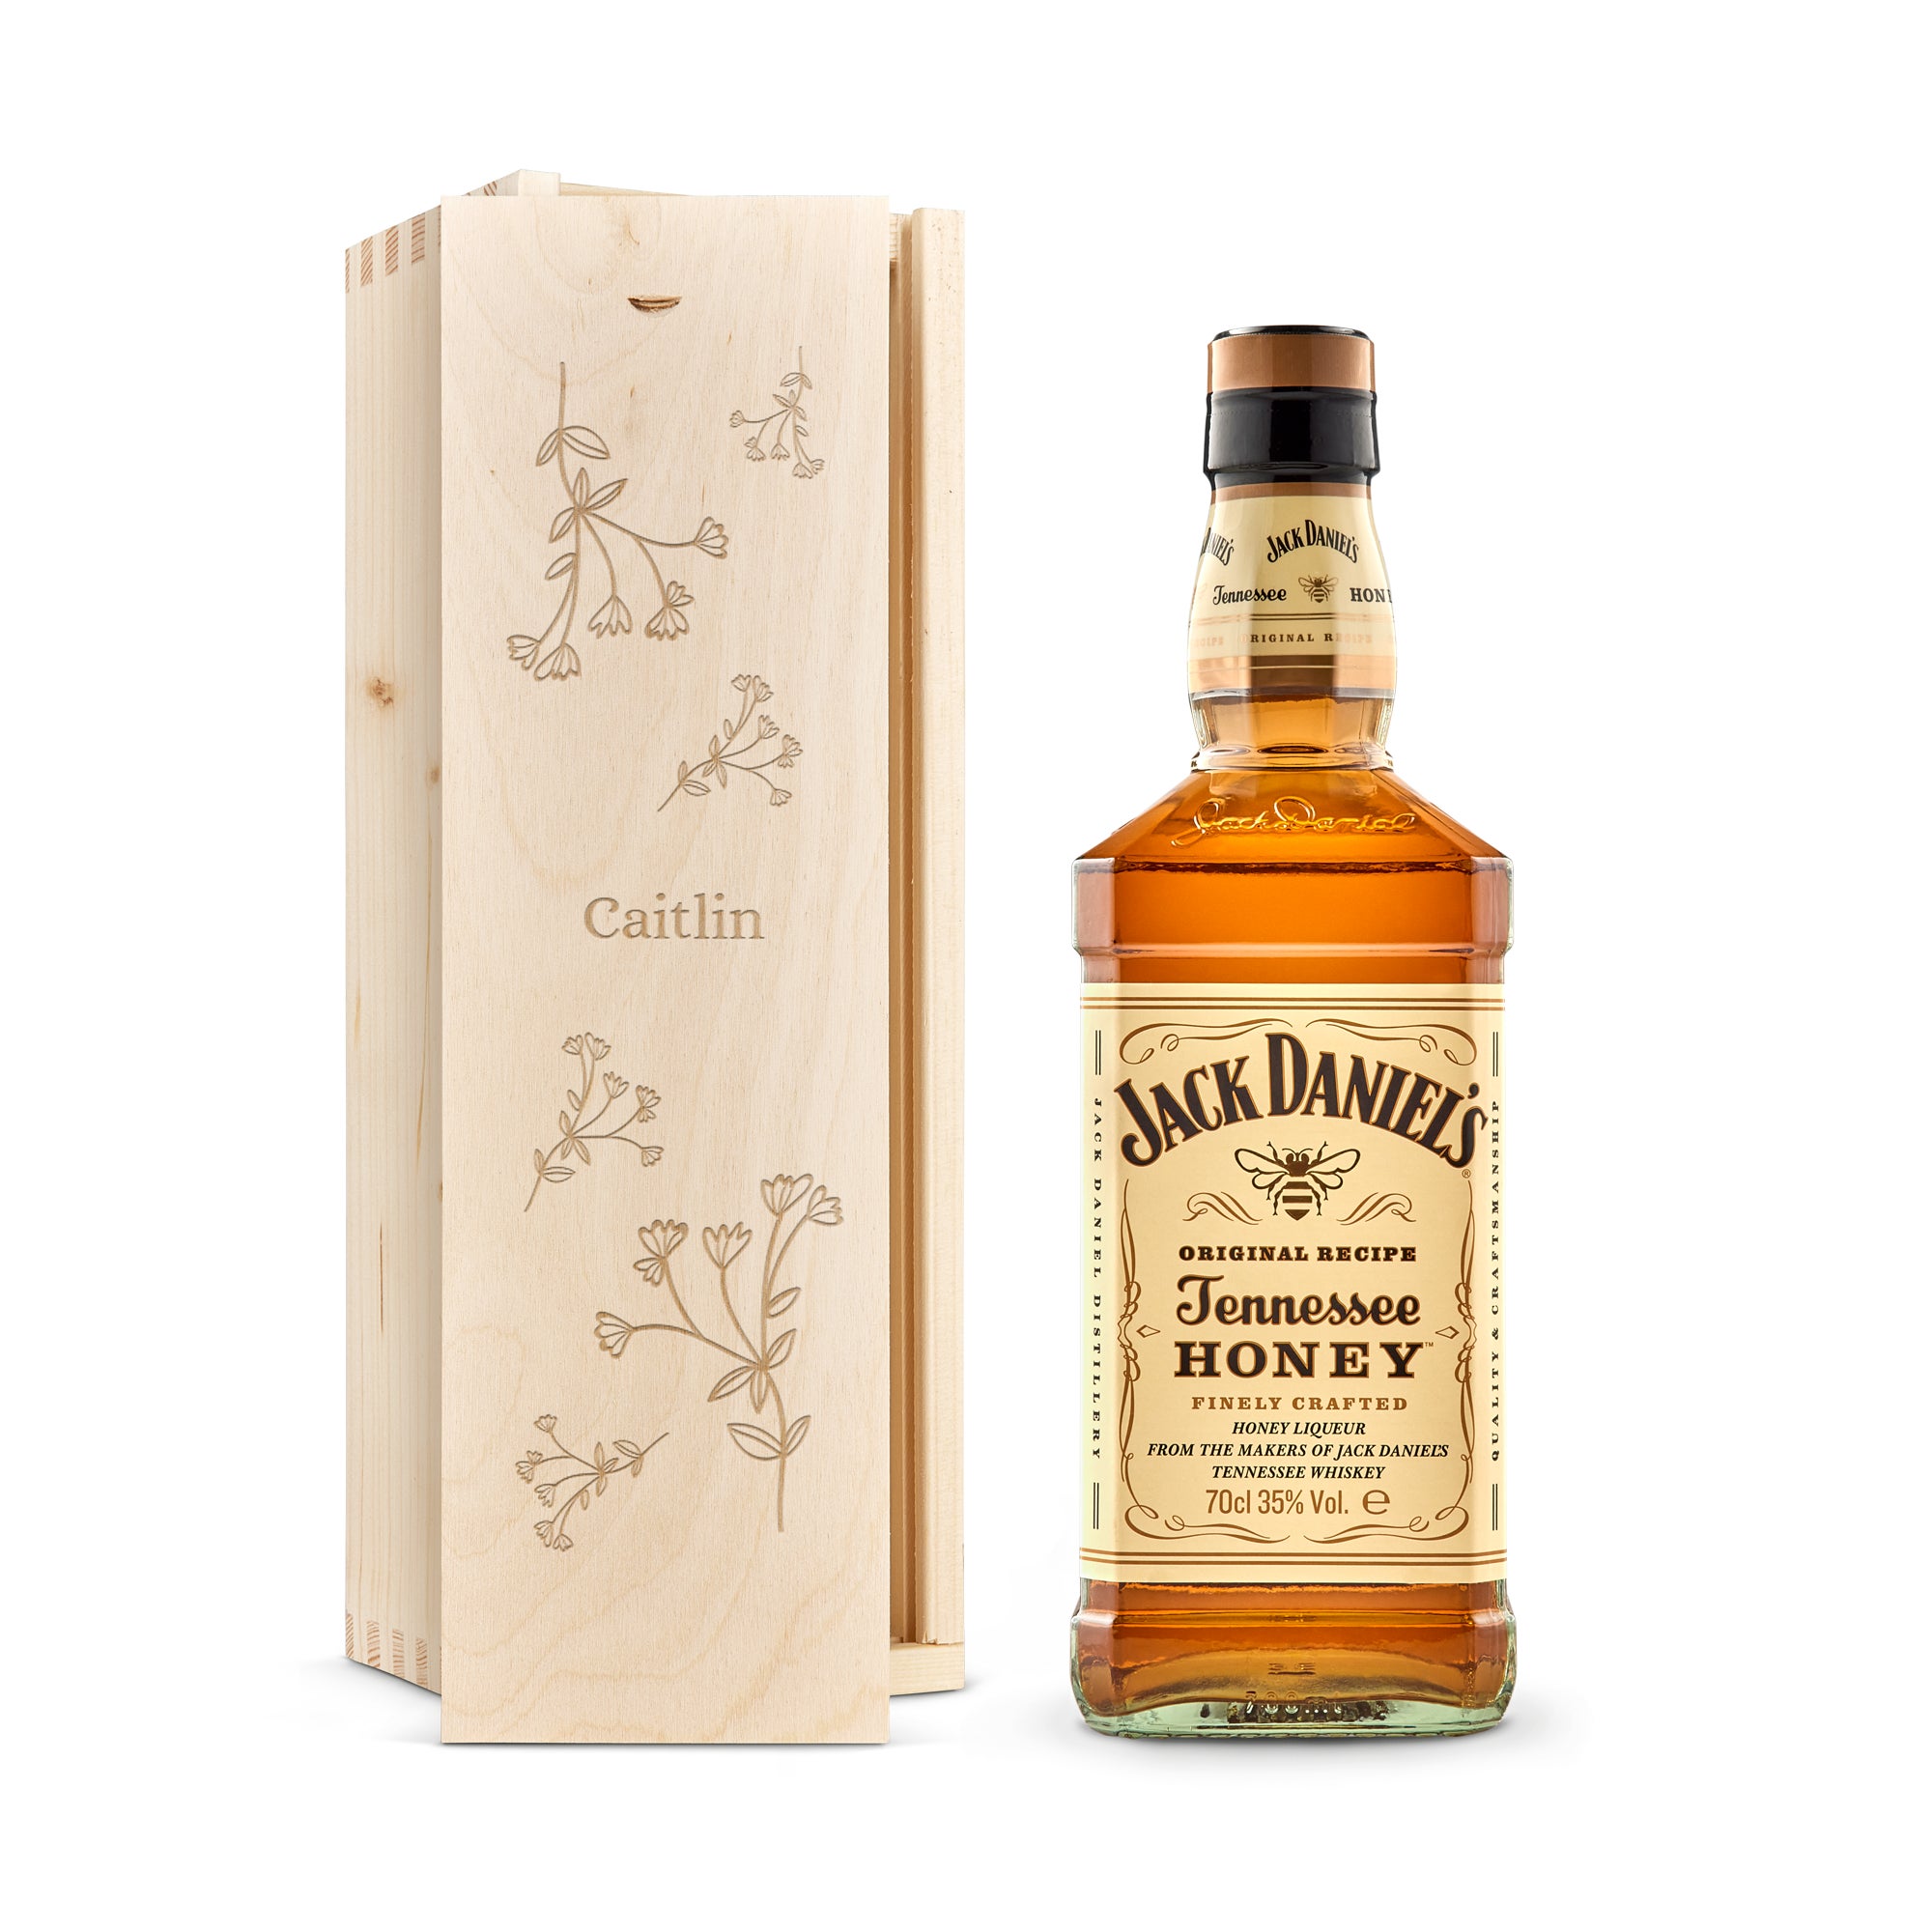 Personalised whiskey gift - Jack Daniels - Honey - Engraved wooden case